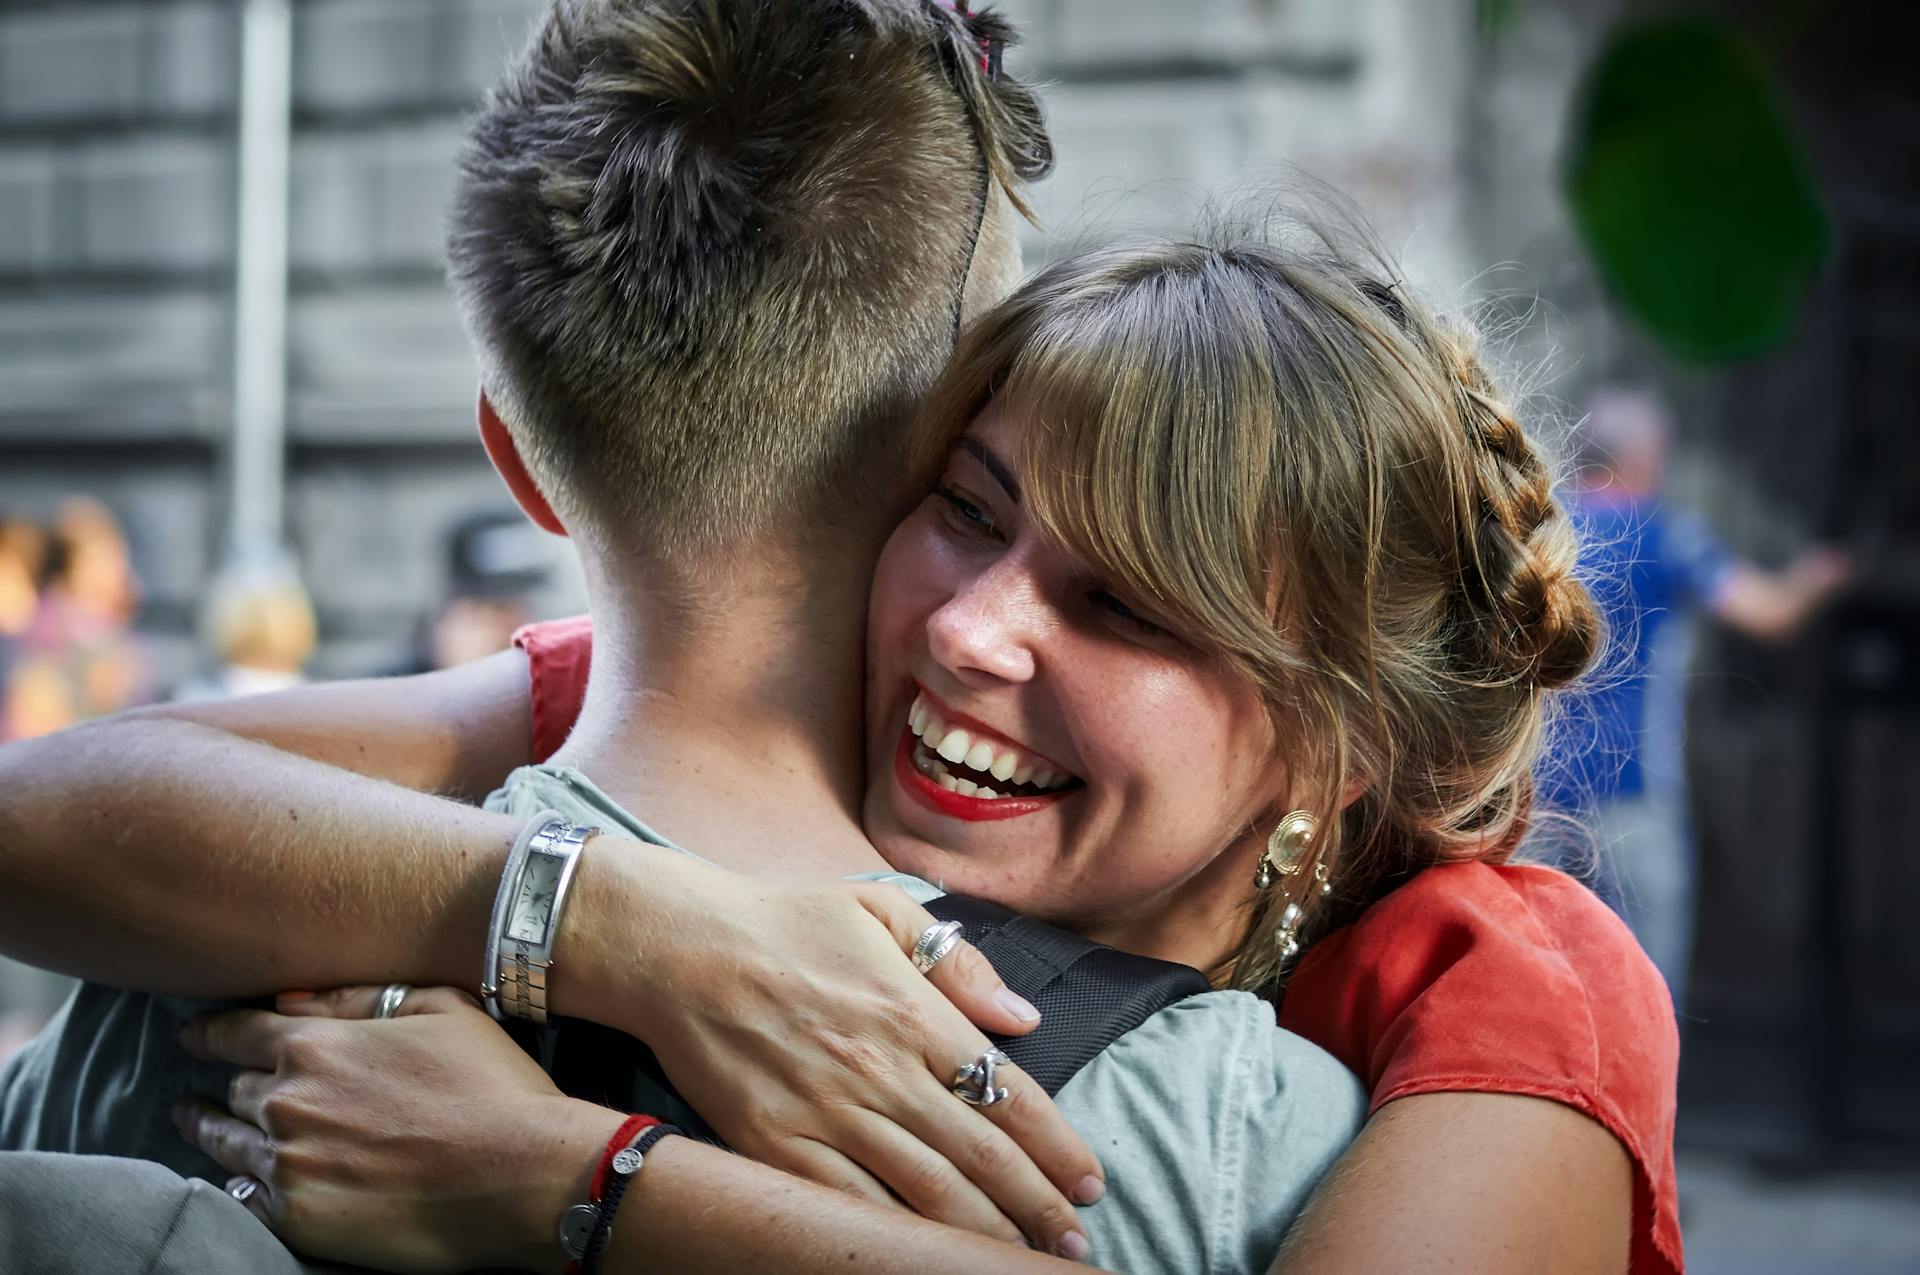 A happy woman hugging her boyfriend | Source: Pexels